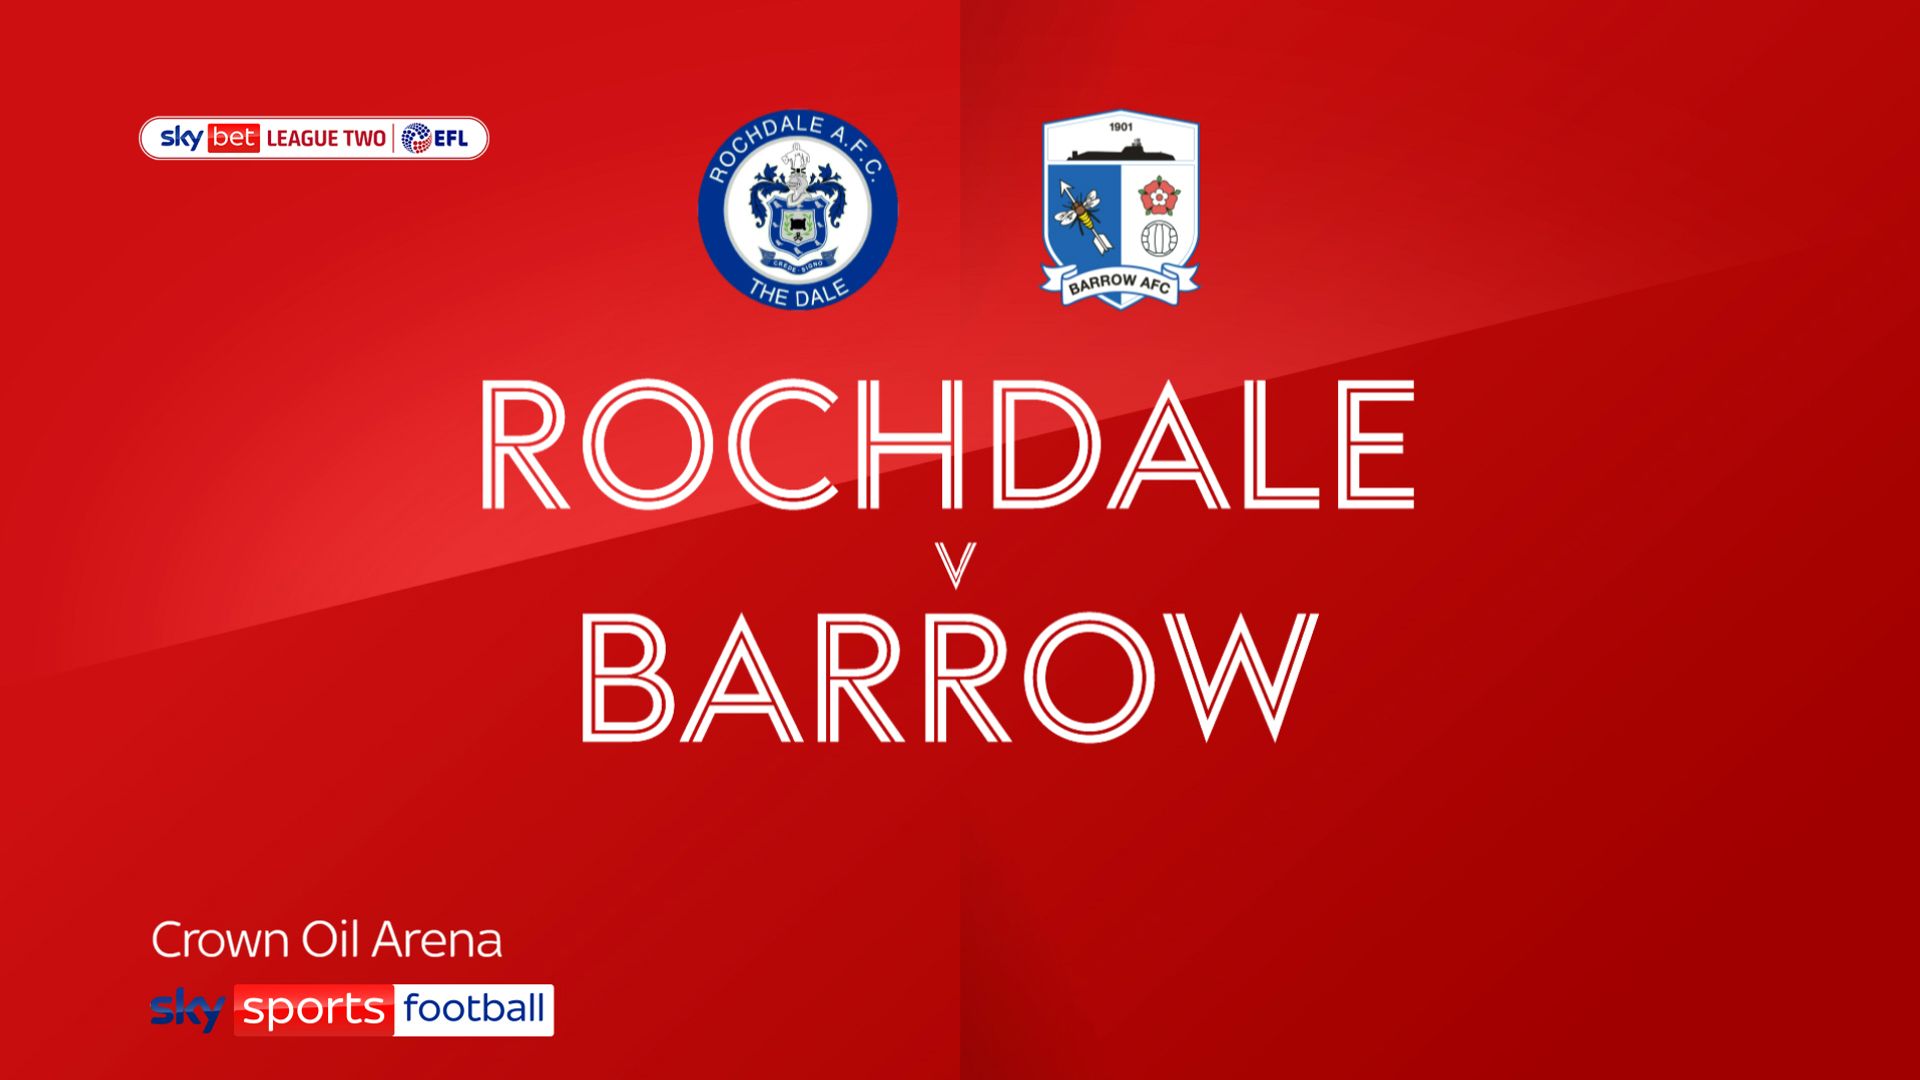 Rochdale beat Barrow to exit drop zone